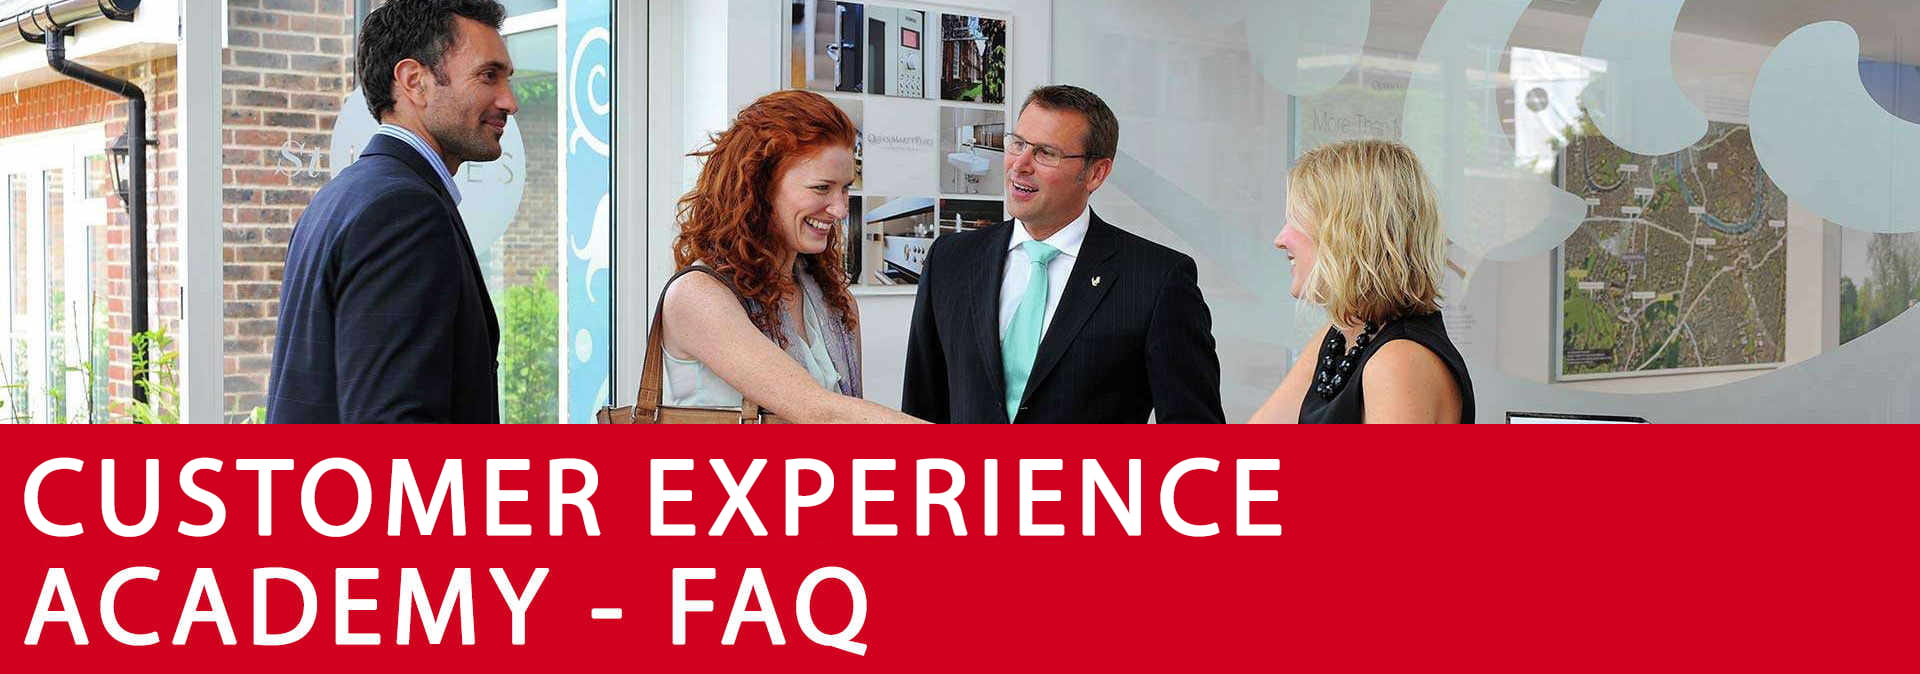 Customer Experience Academy - FAQ